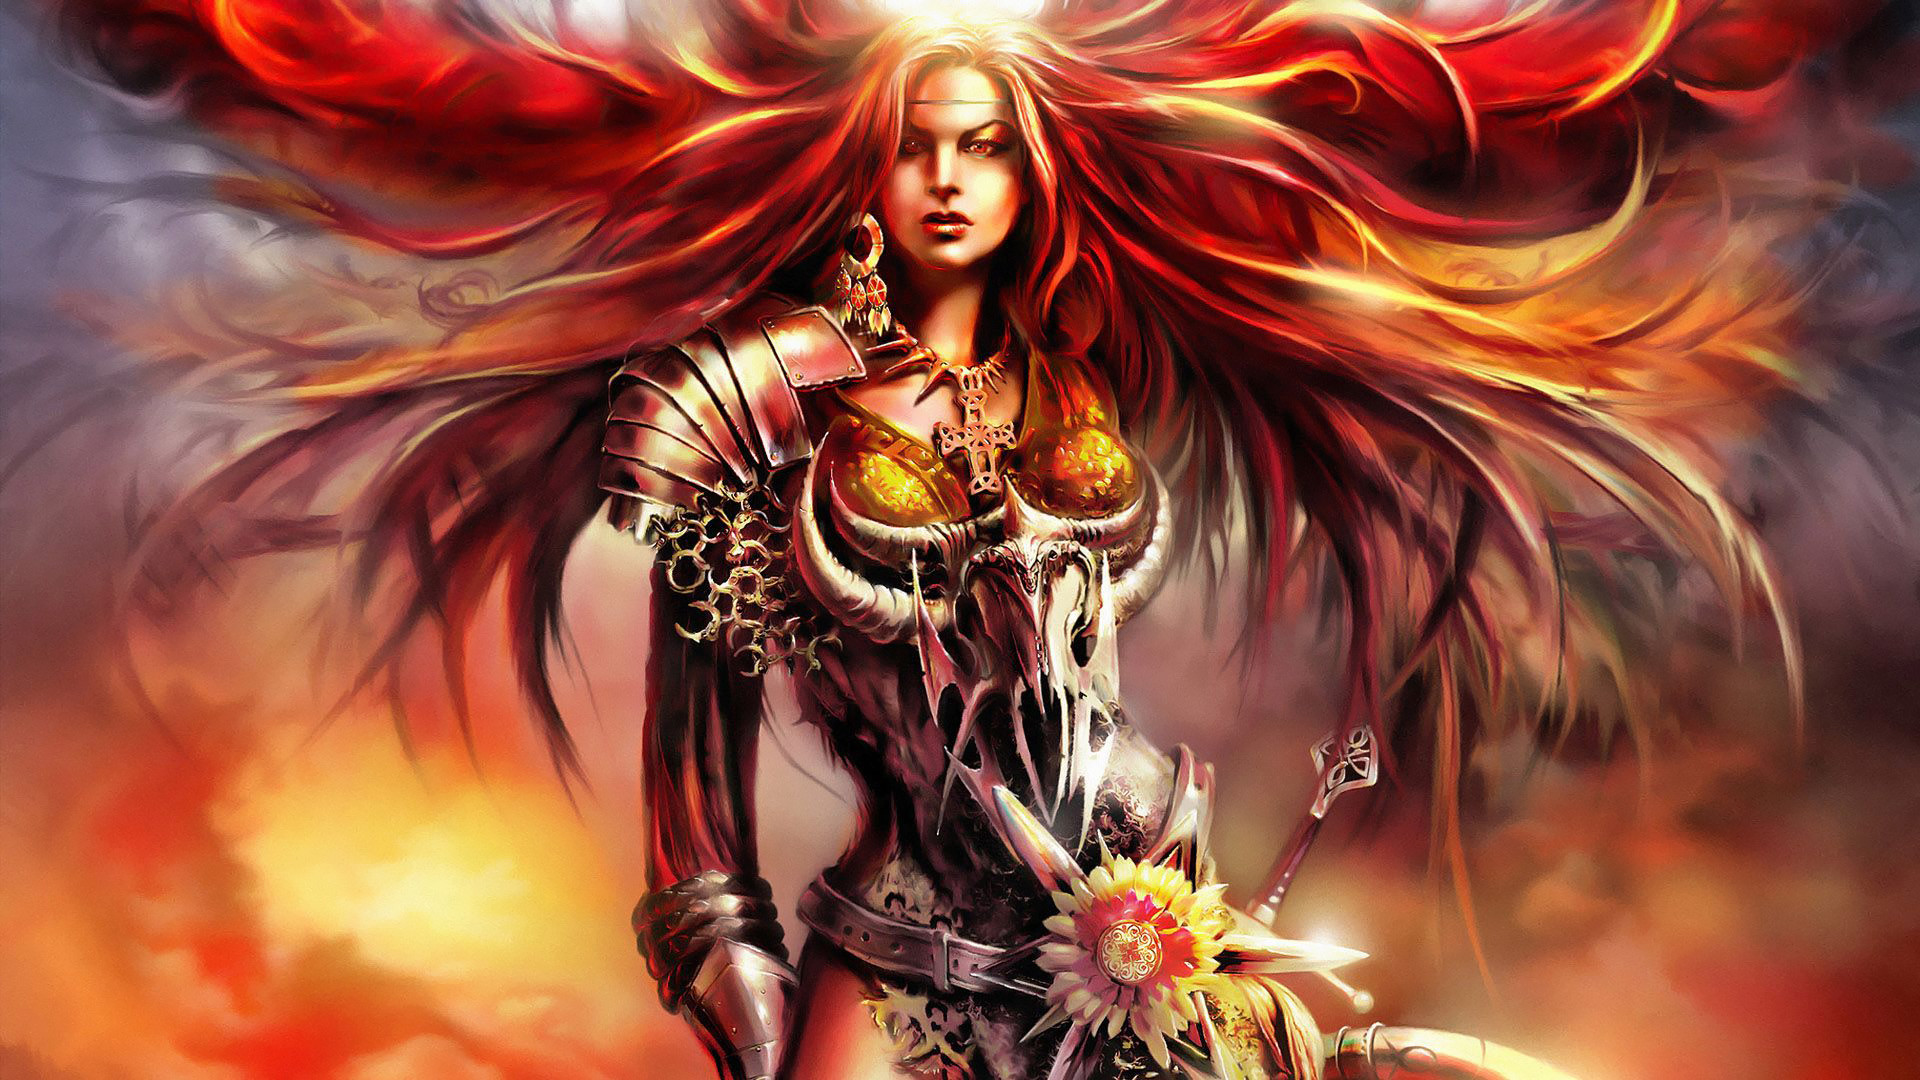 1920x1080 Fantasy - Women Warrior Red Hair Fantasy Woman Warrior Woman Girl Armor  Long Hair Red Eyes